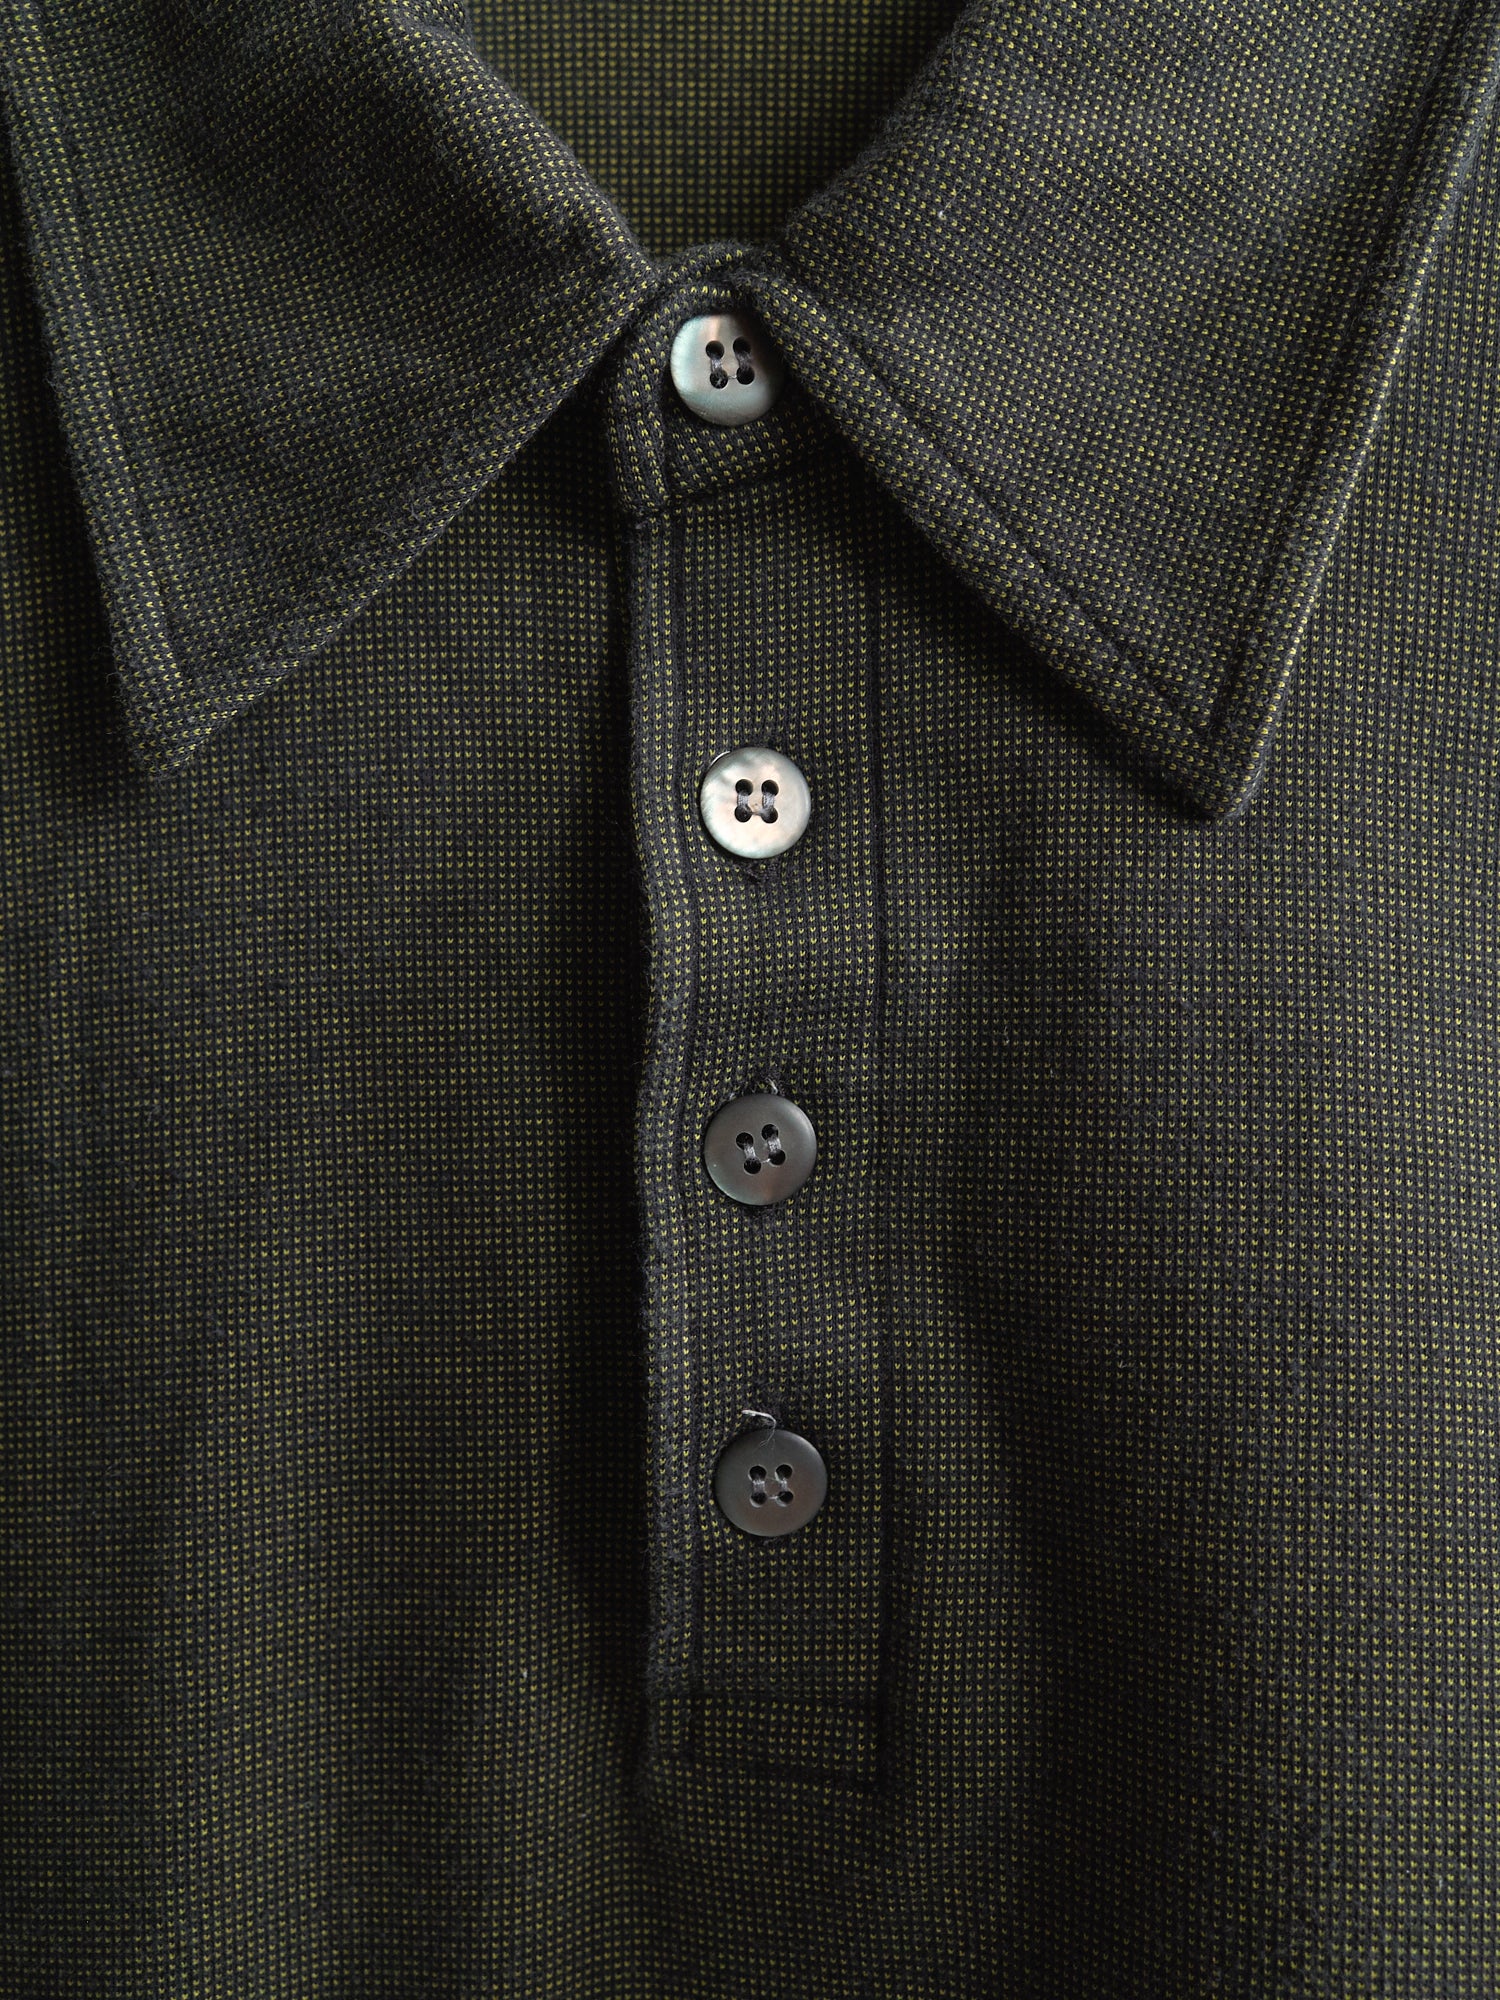 Yohji Yamamoto AAR 1990s green cotton blend irridescent polo shirt - mens XS S